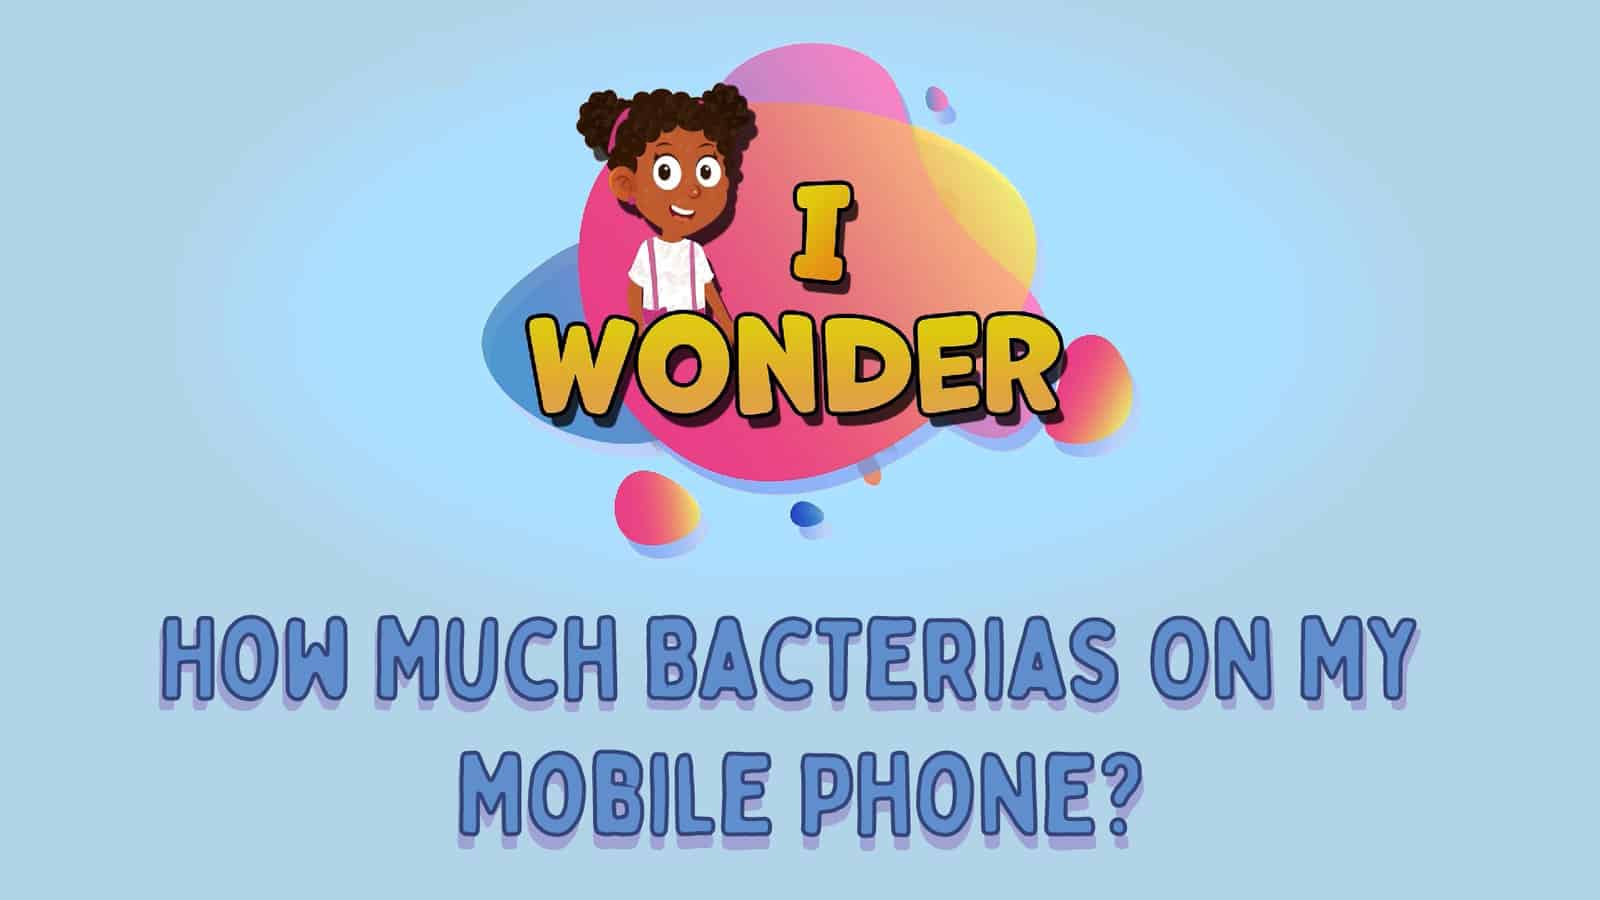 Bacteria Is On My Mobile Phone LearningMole